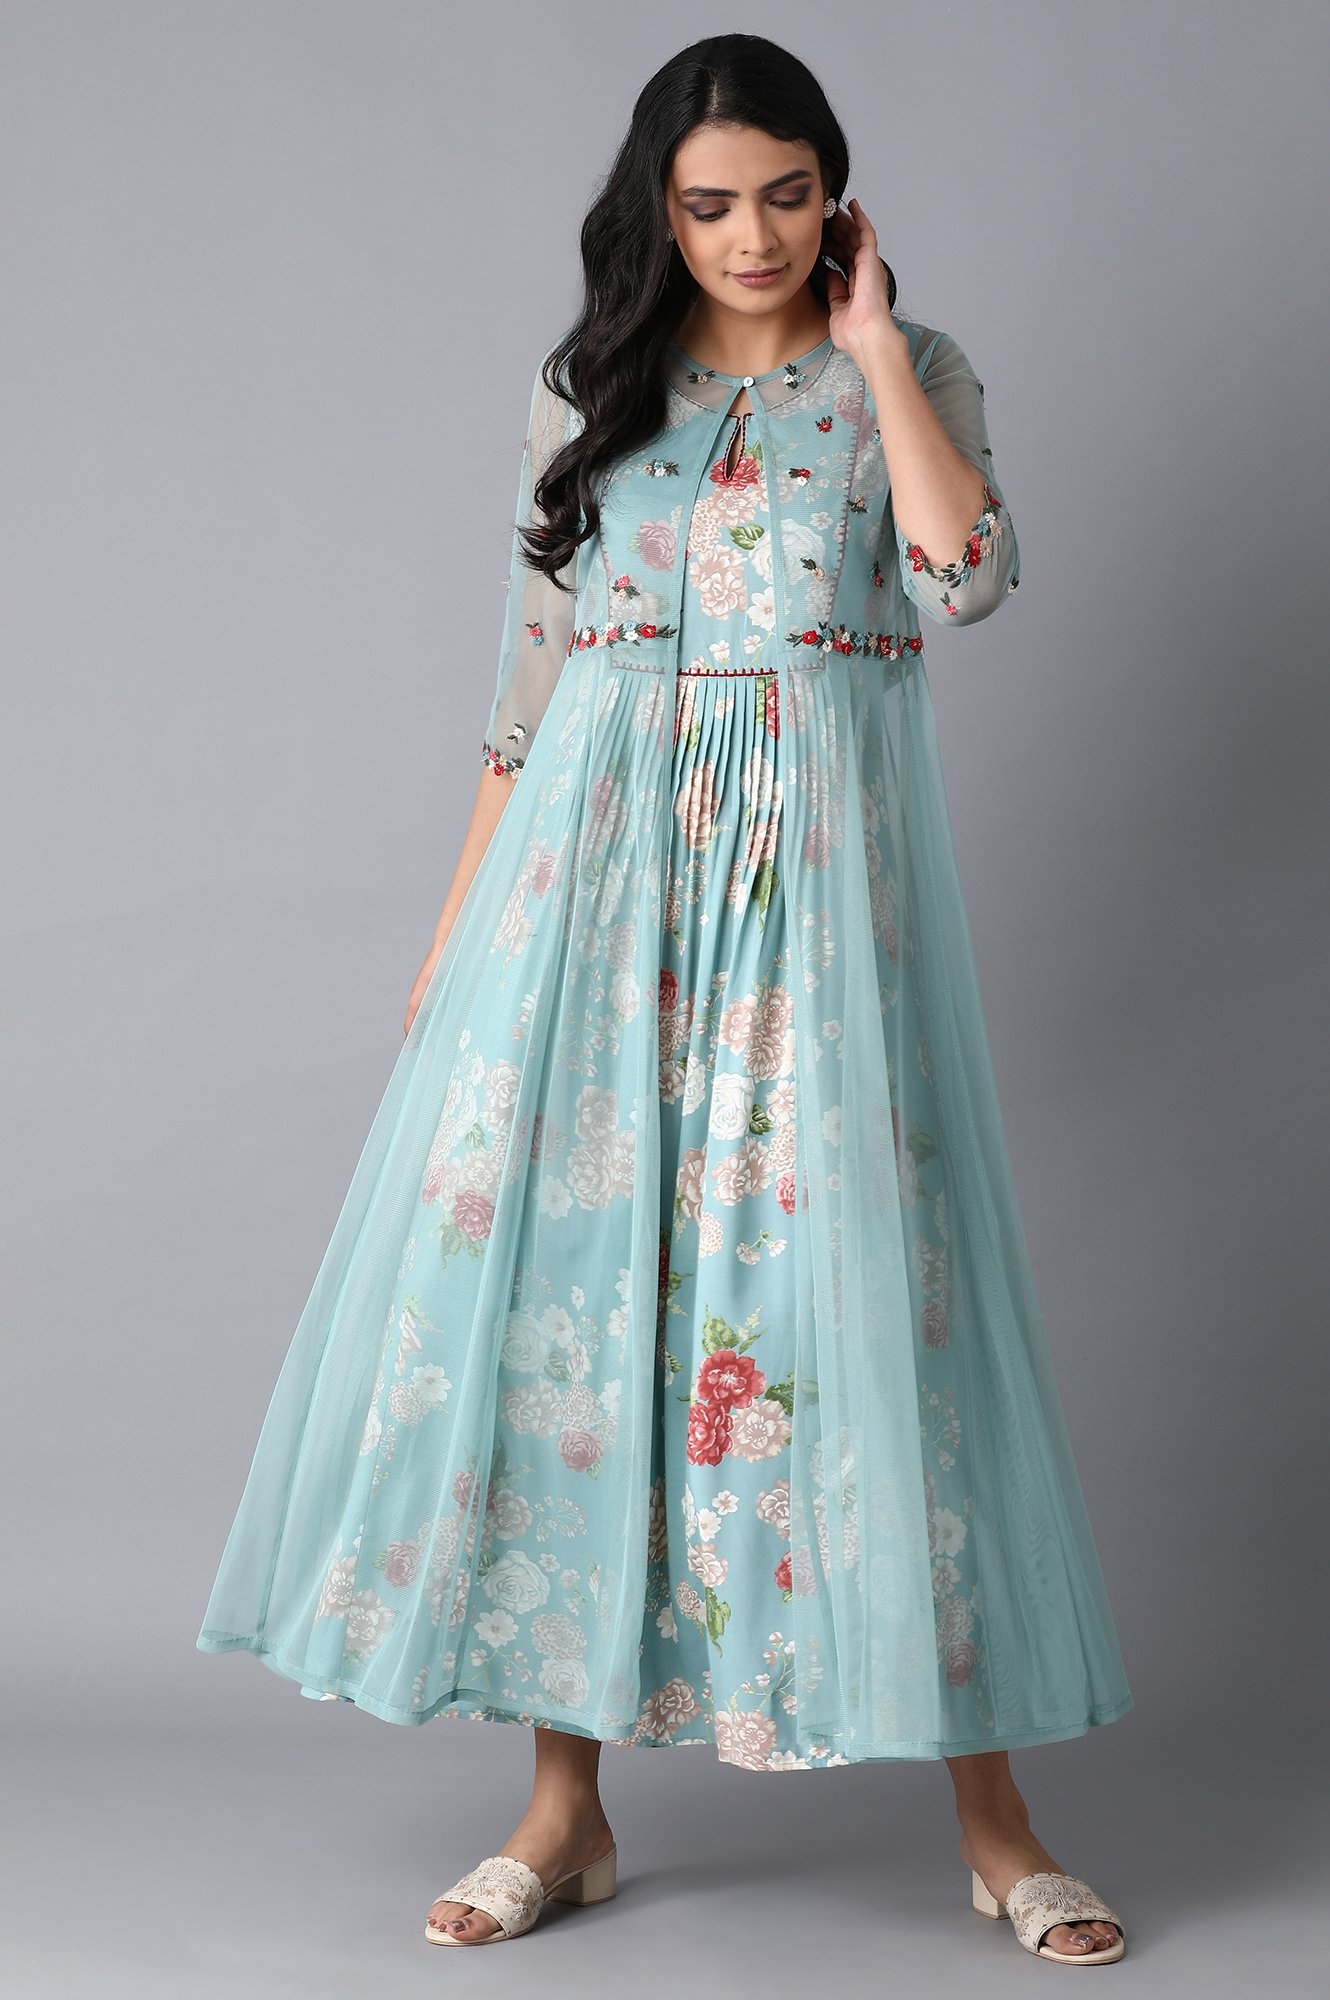 W | W Light Teal Floral Print Dress-Gilet Set